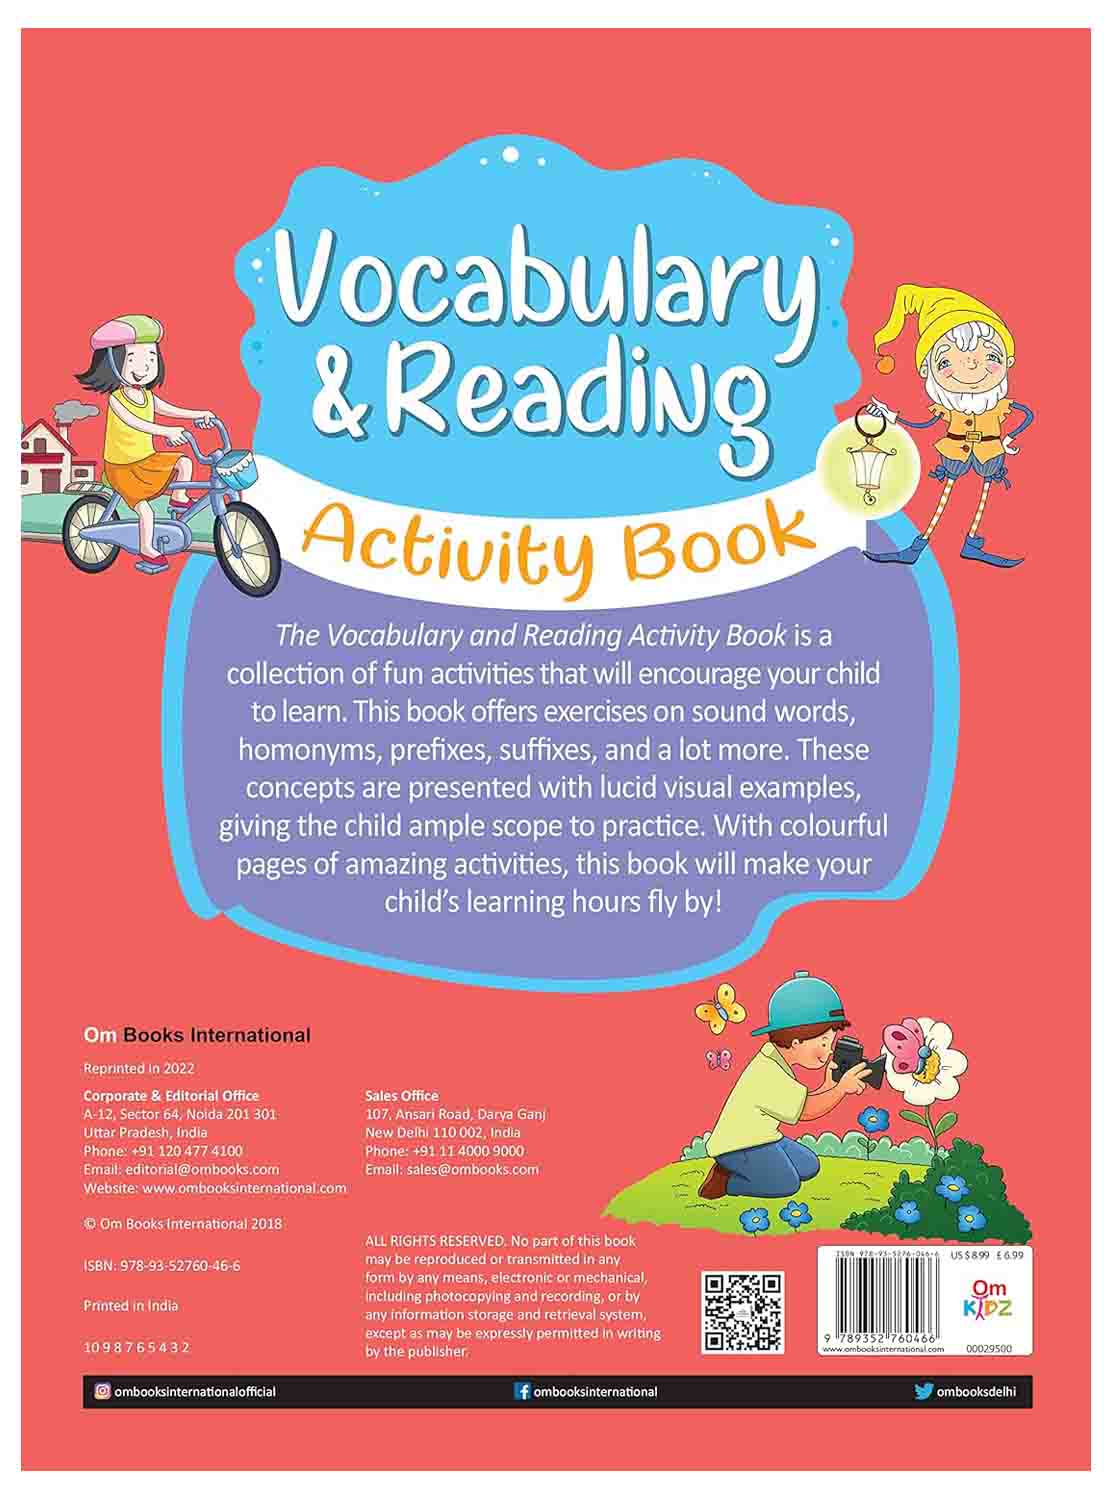 Om Books International Vocabulary and Reading Activity Book - 9789352760466